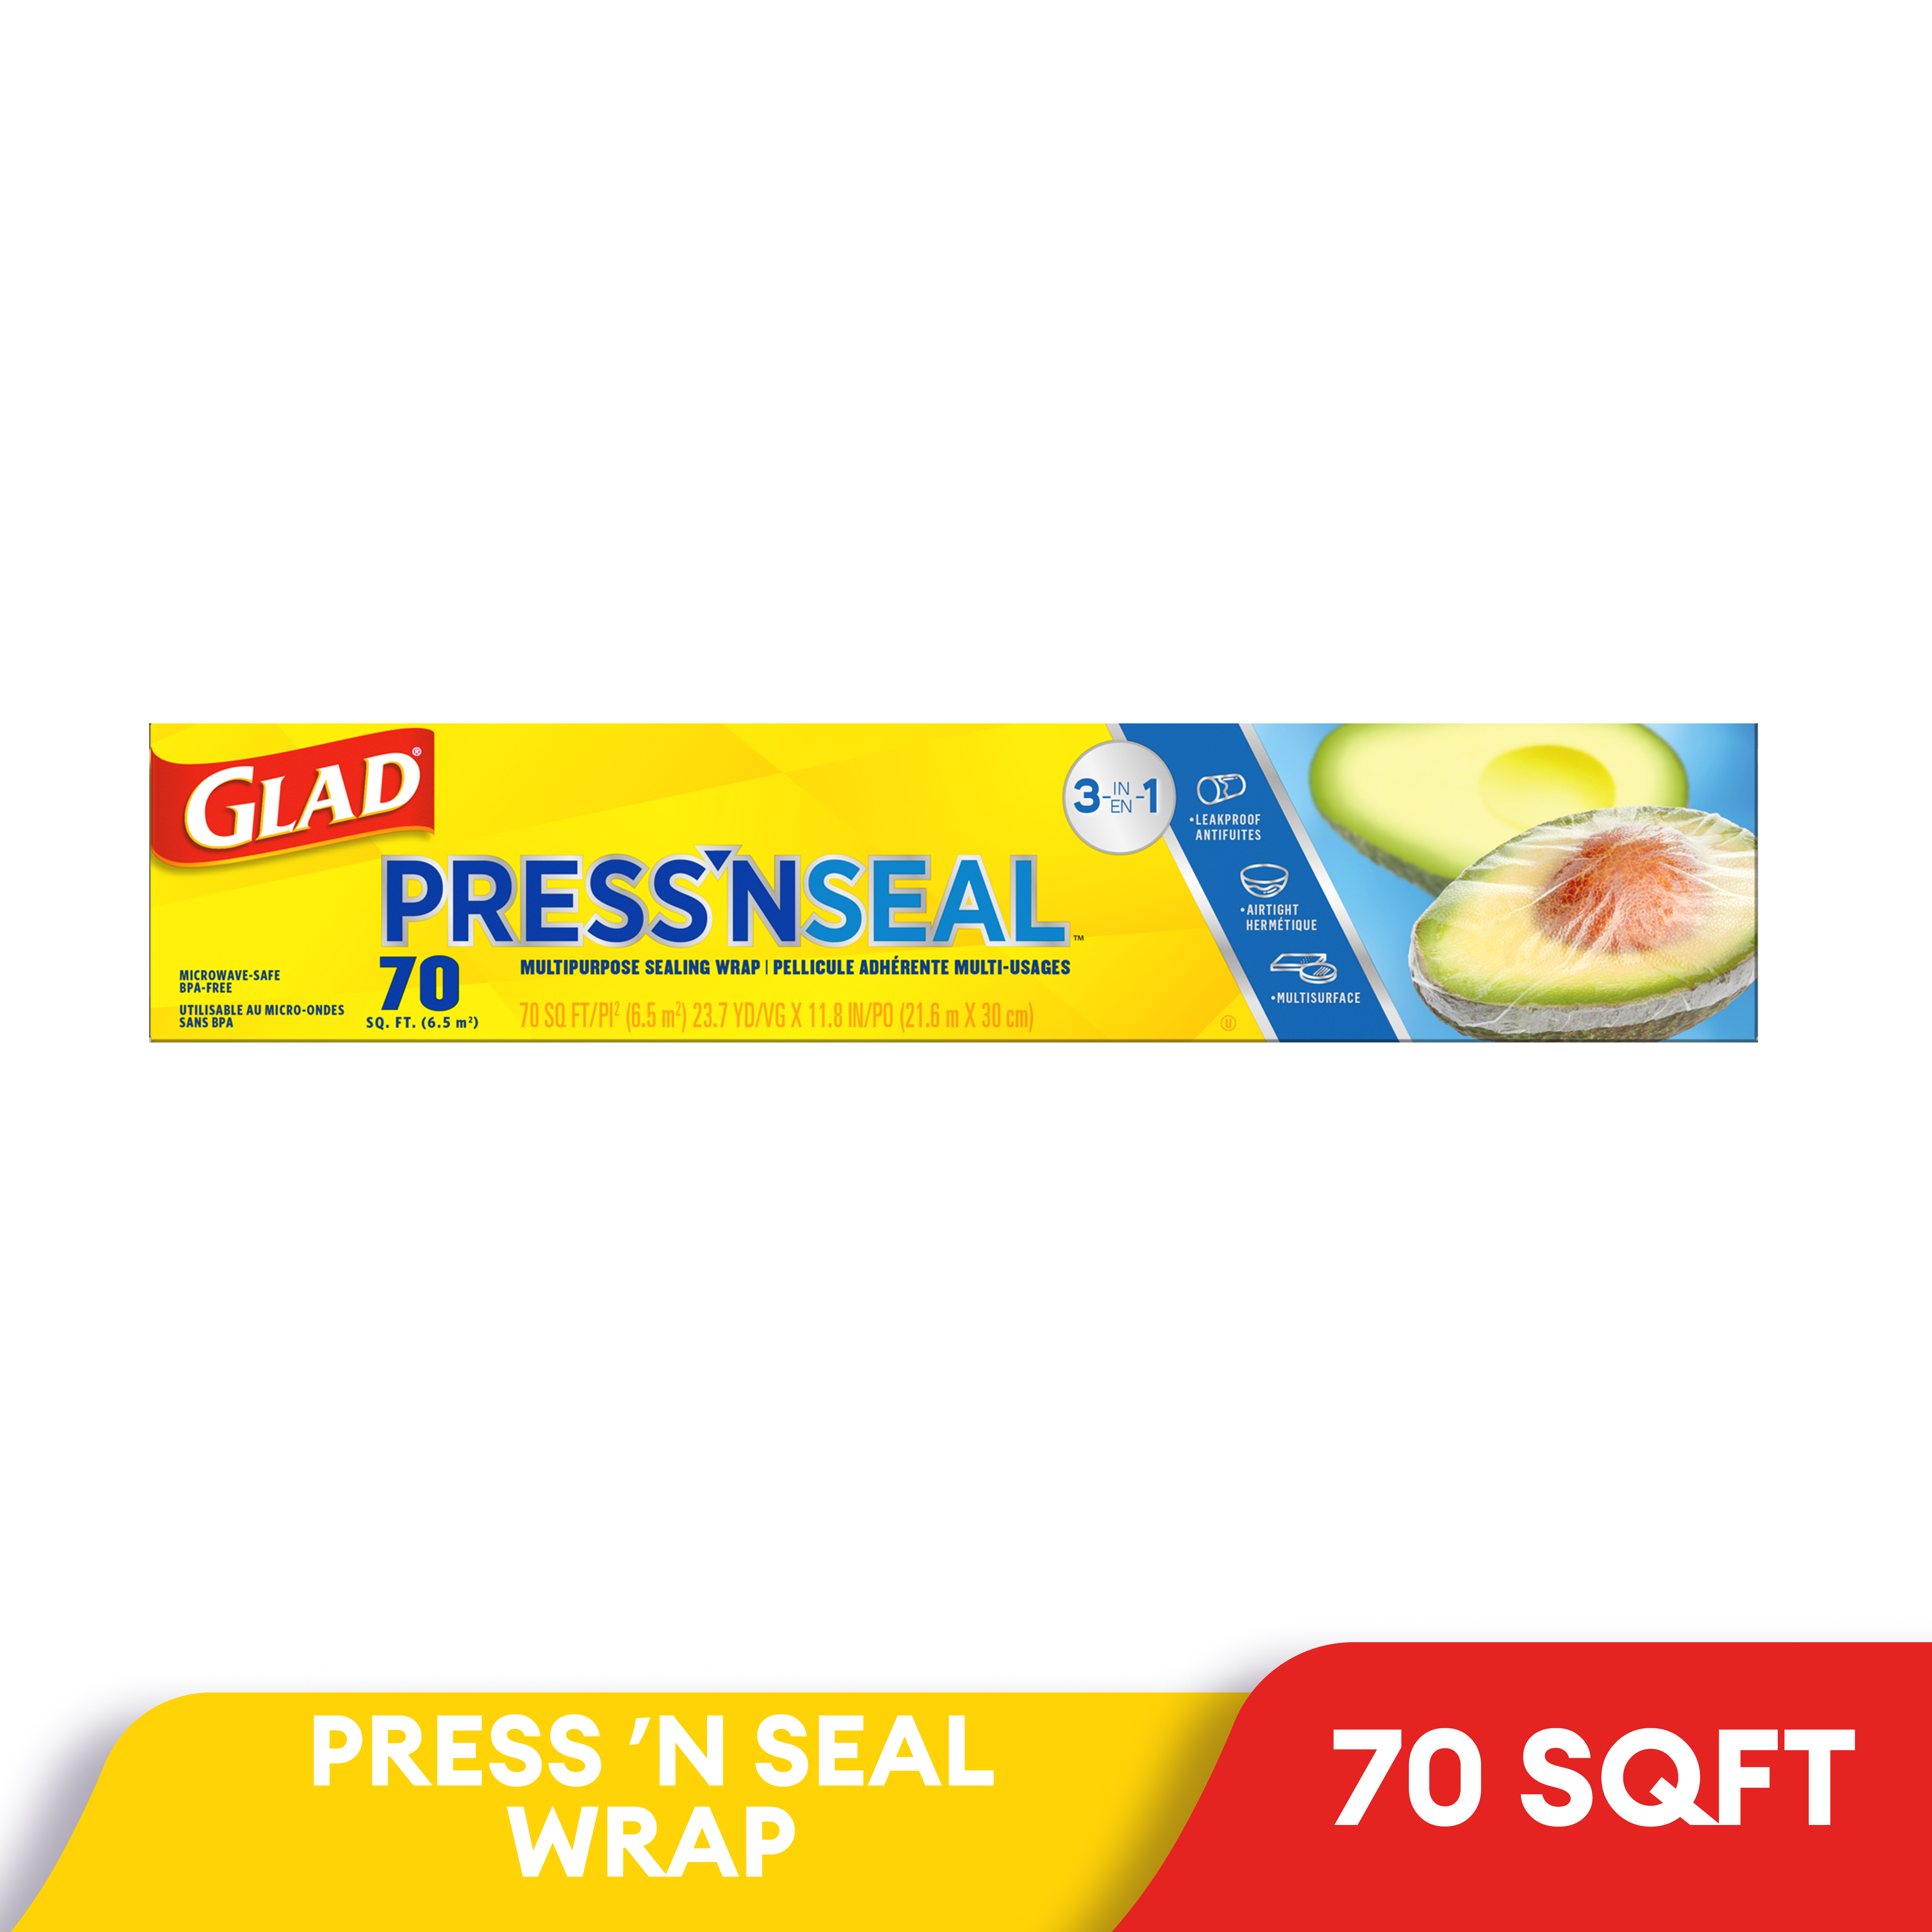 Glad Press N Seal Plastic Wrap, 2 Pack/140 sq. ft.